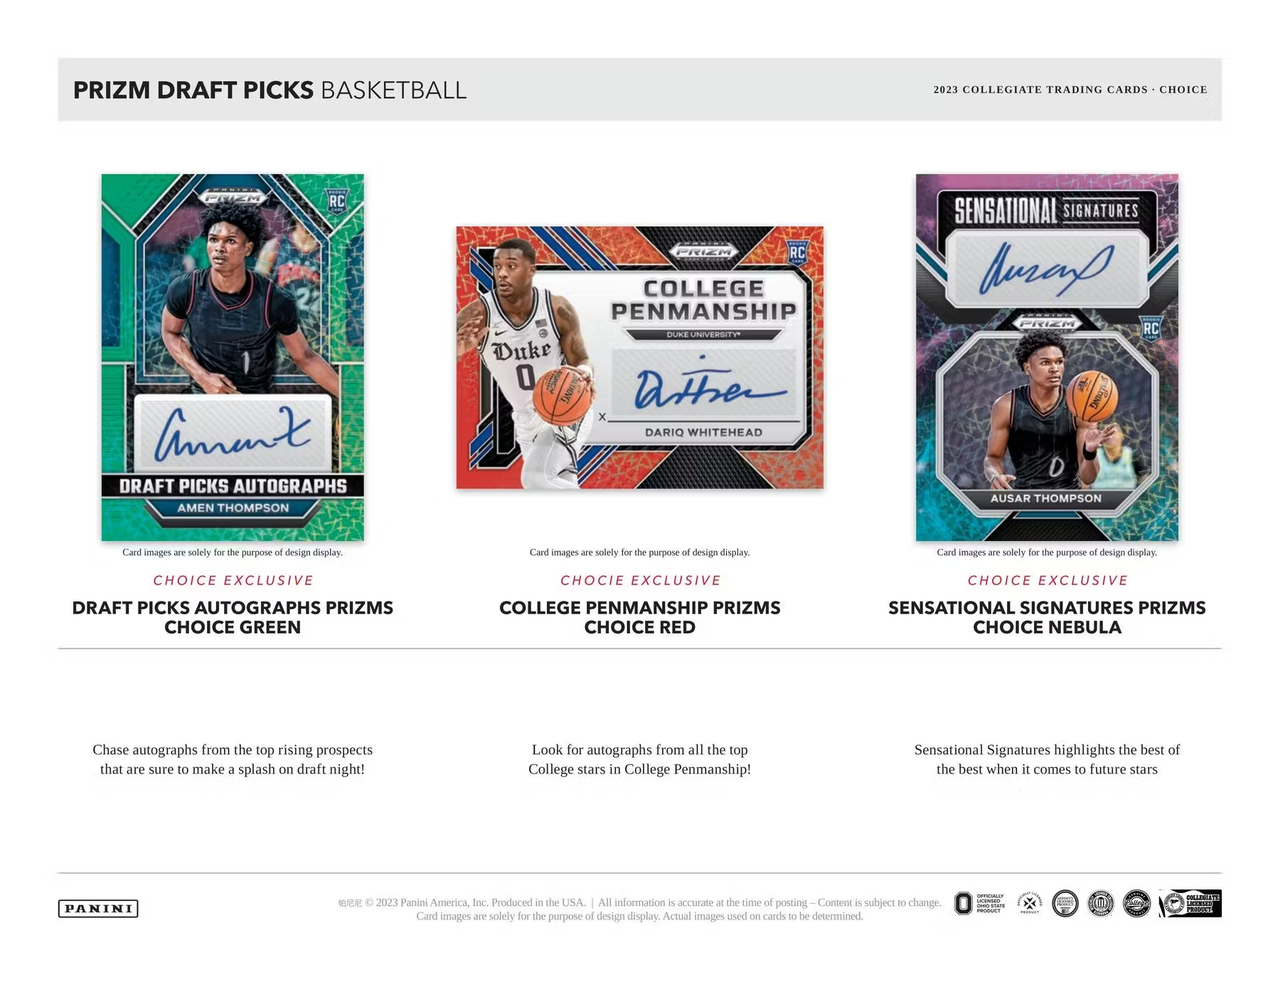 2023 Panini Prizm Draft Picks Basketball Choice Box